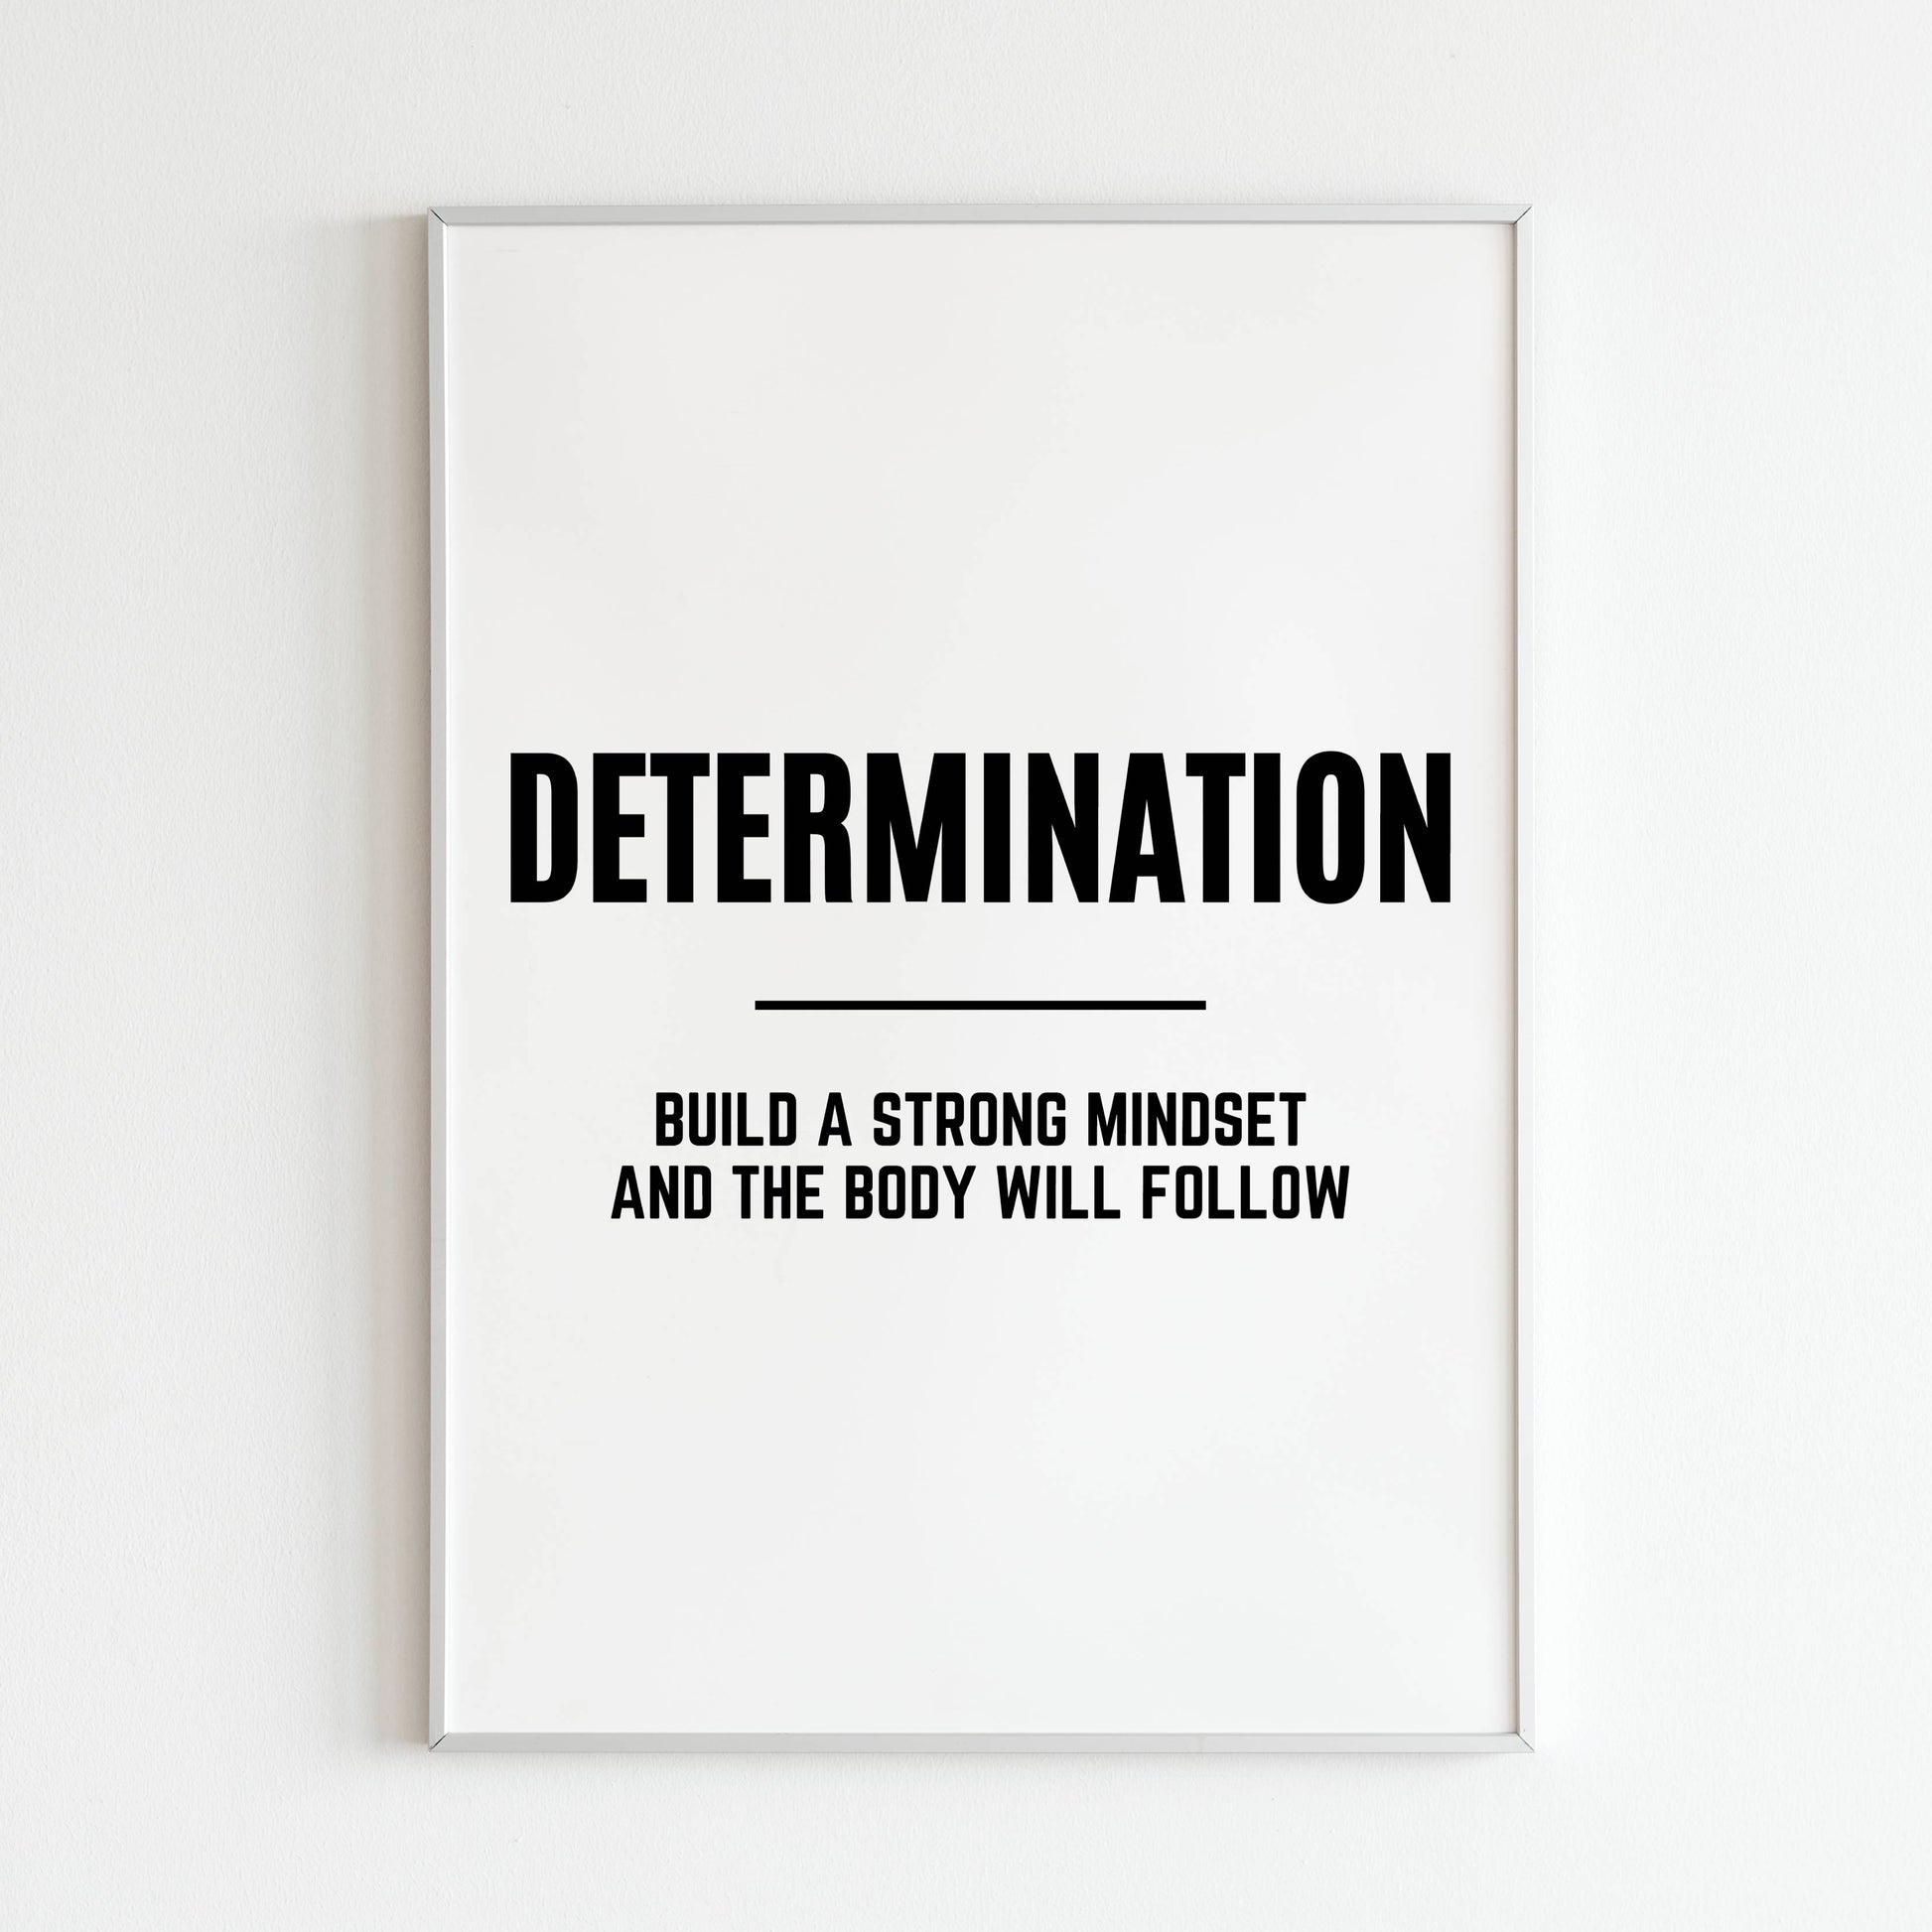 Downloadable "Determination" art print to celebrate resolve.